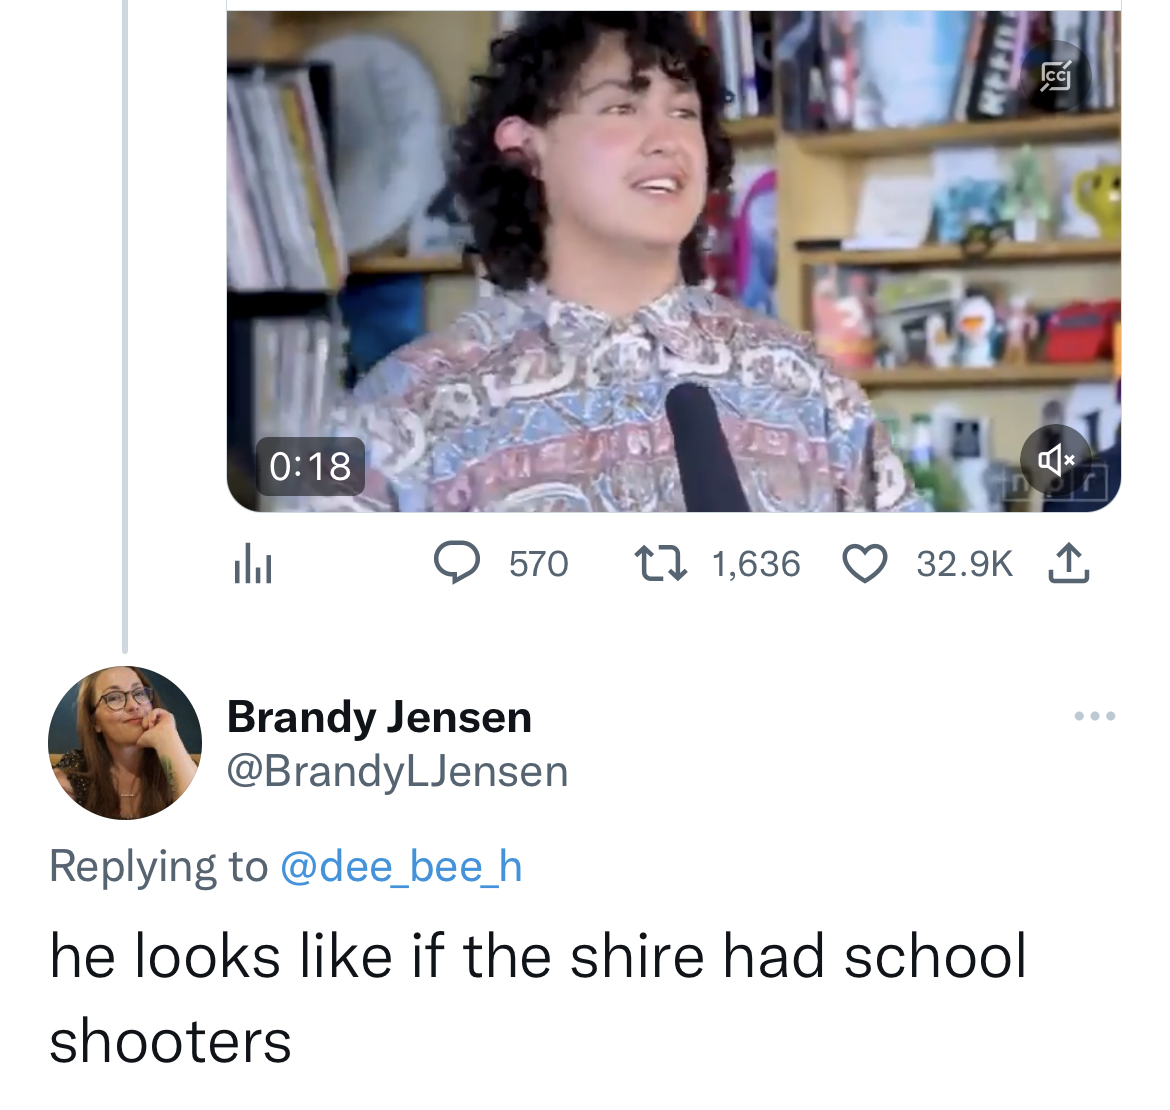 Tweets dunking on celebs - media - 570 11,636 Brandy Jensen Teen x 1 he looks if the shire had school shooters